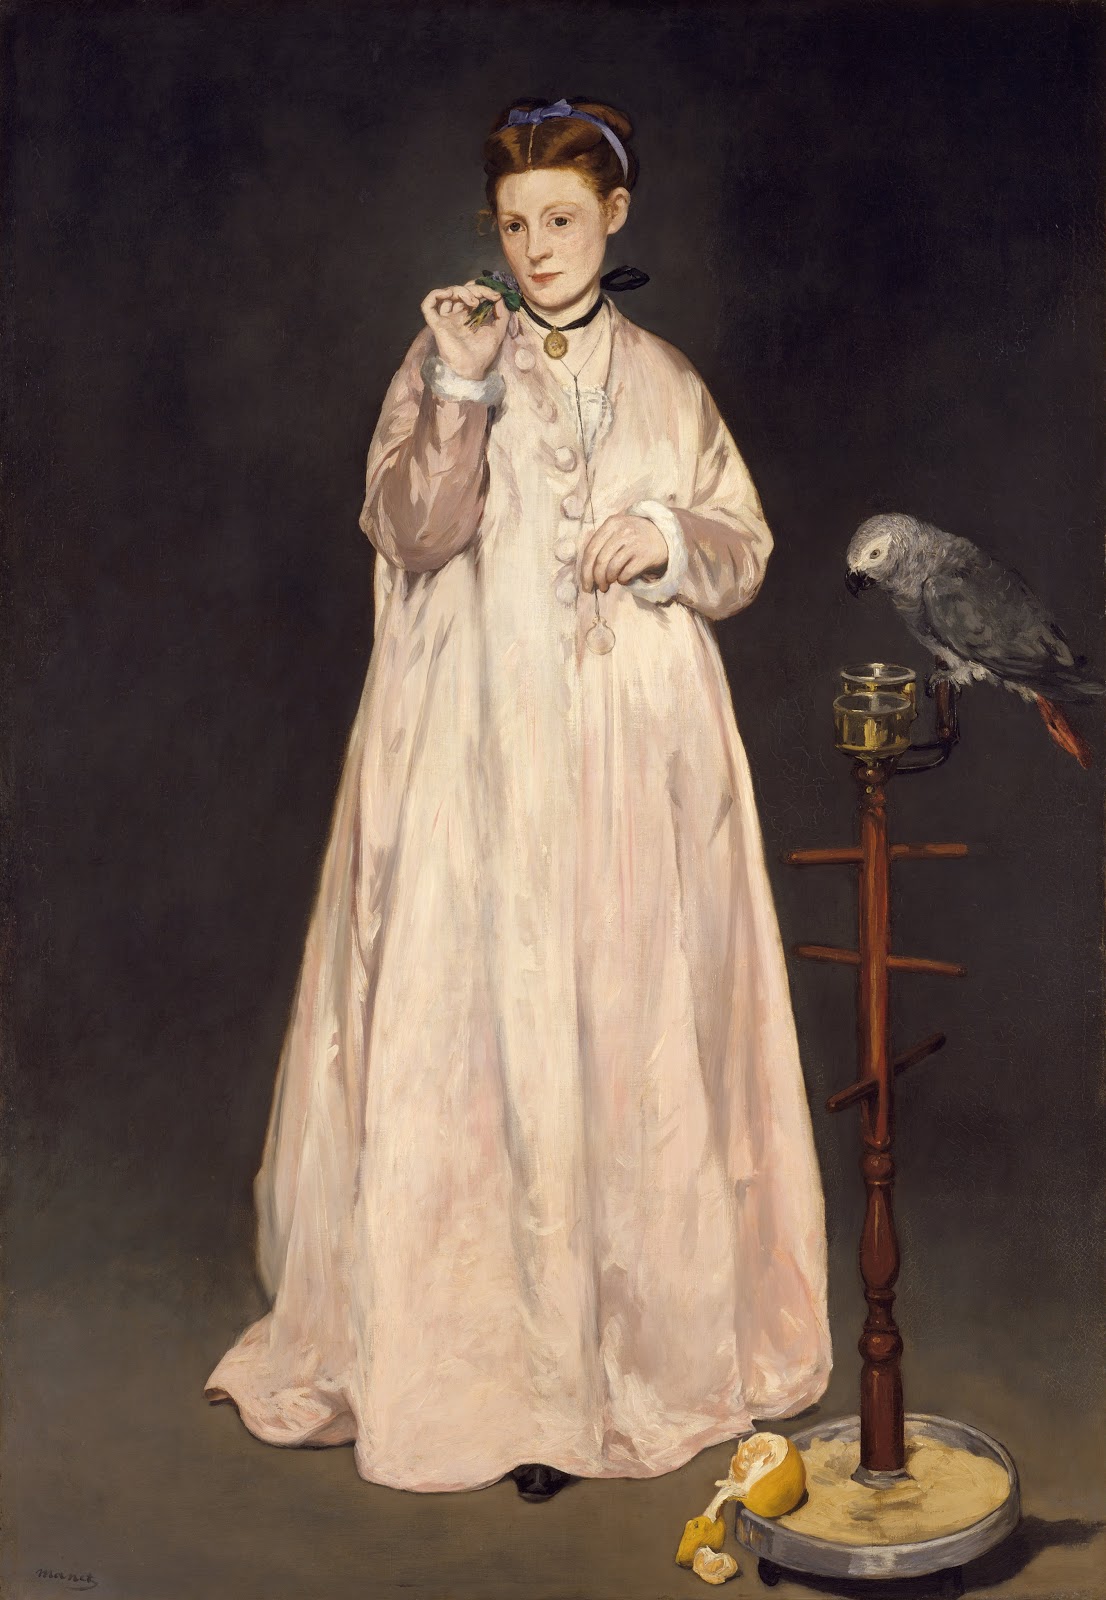 Edouard+Manet-1832-1883 (42).jpg